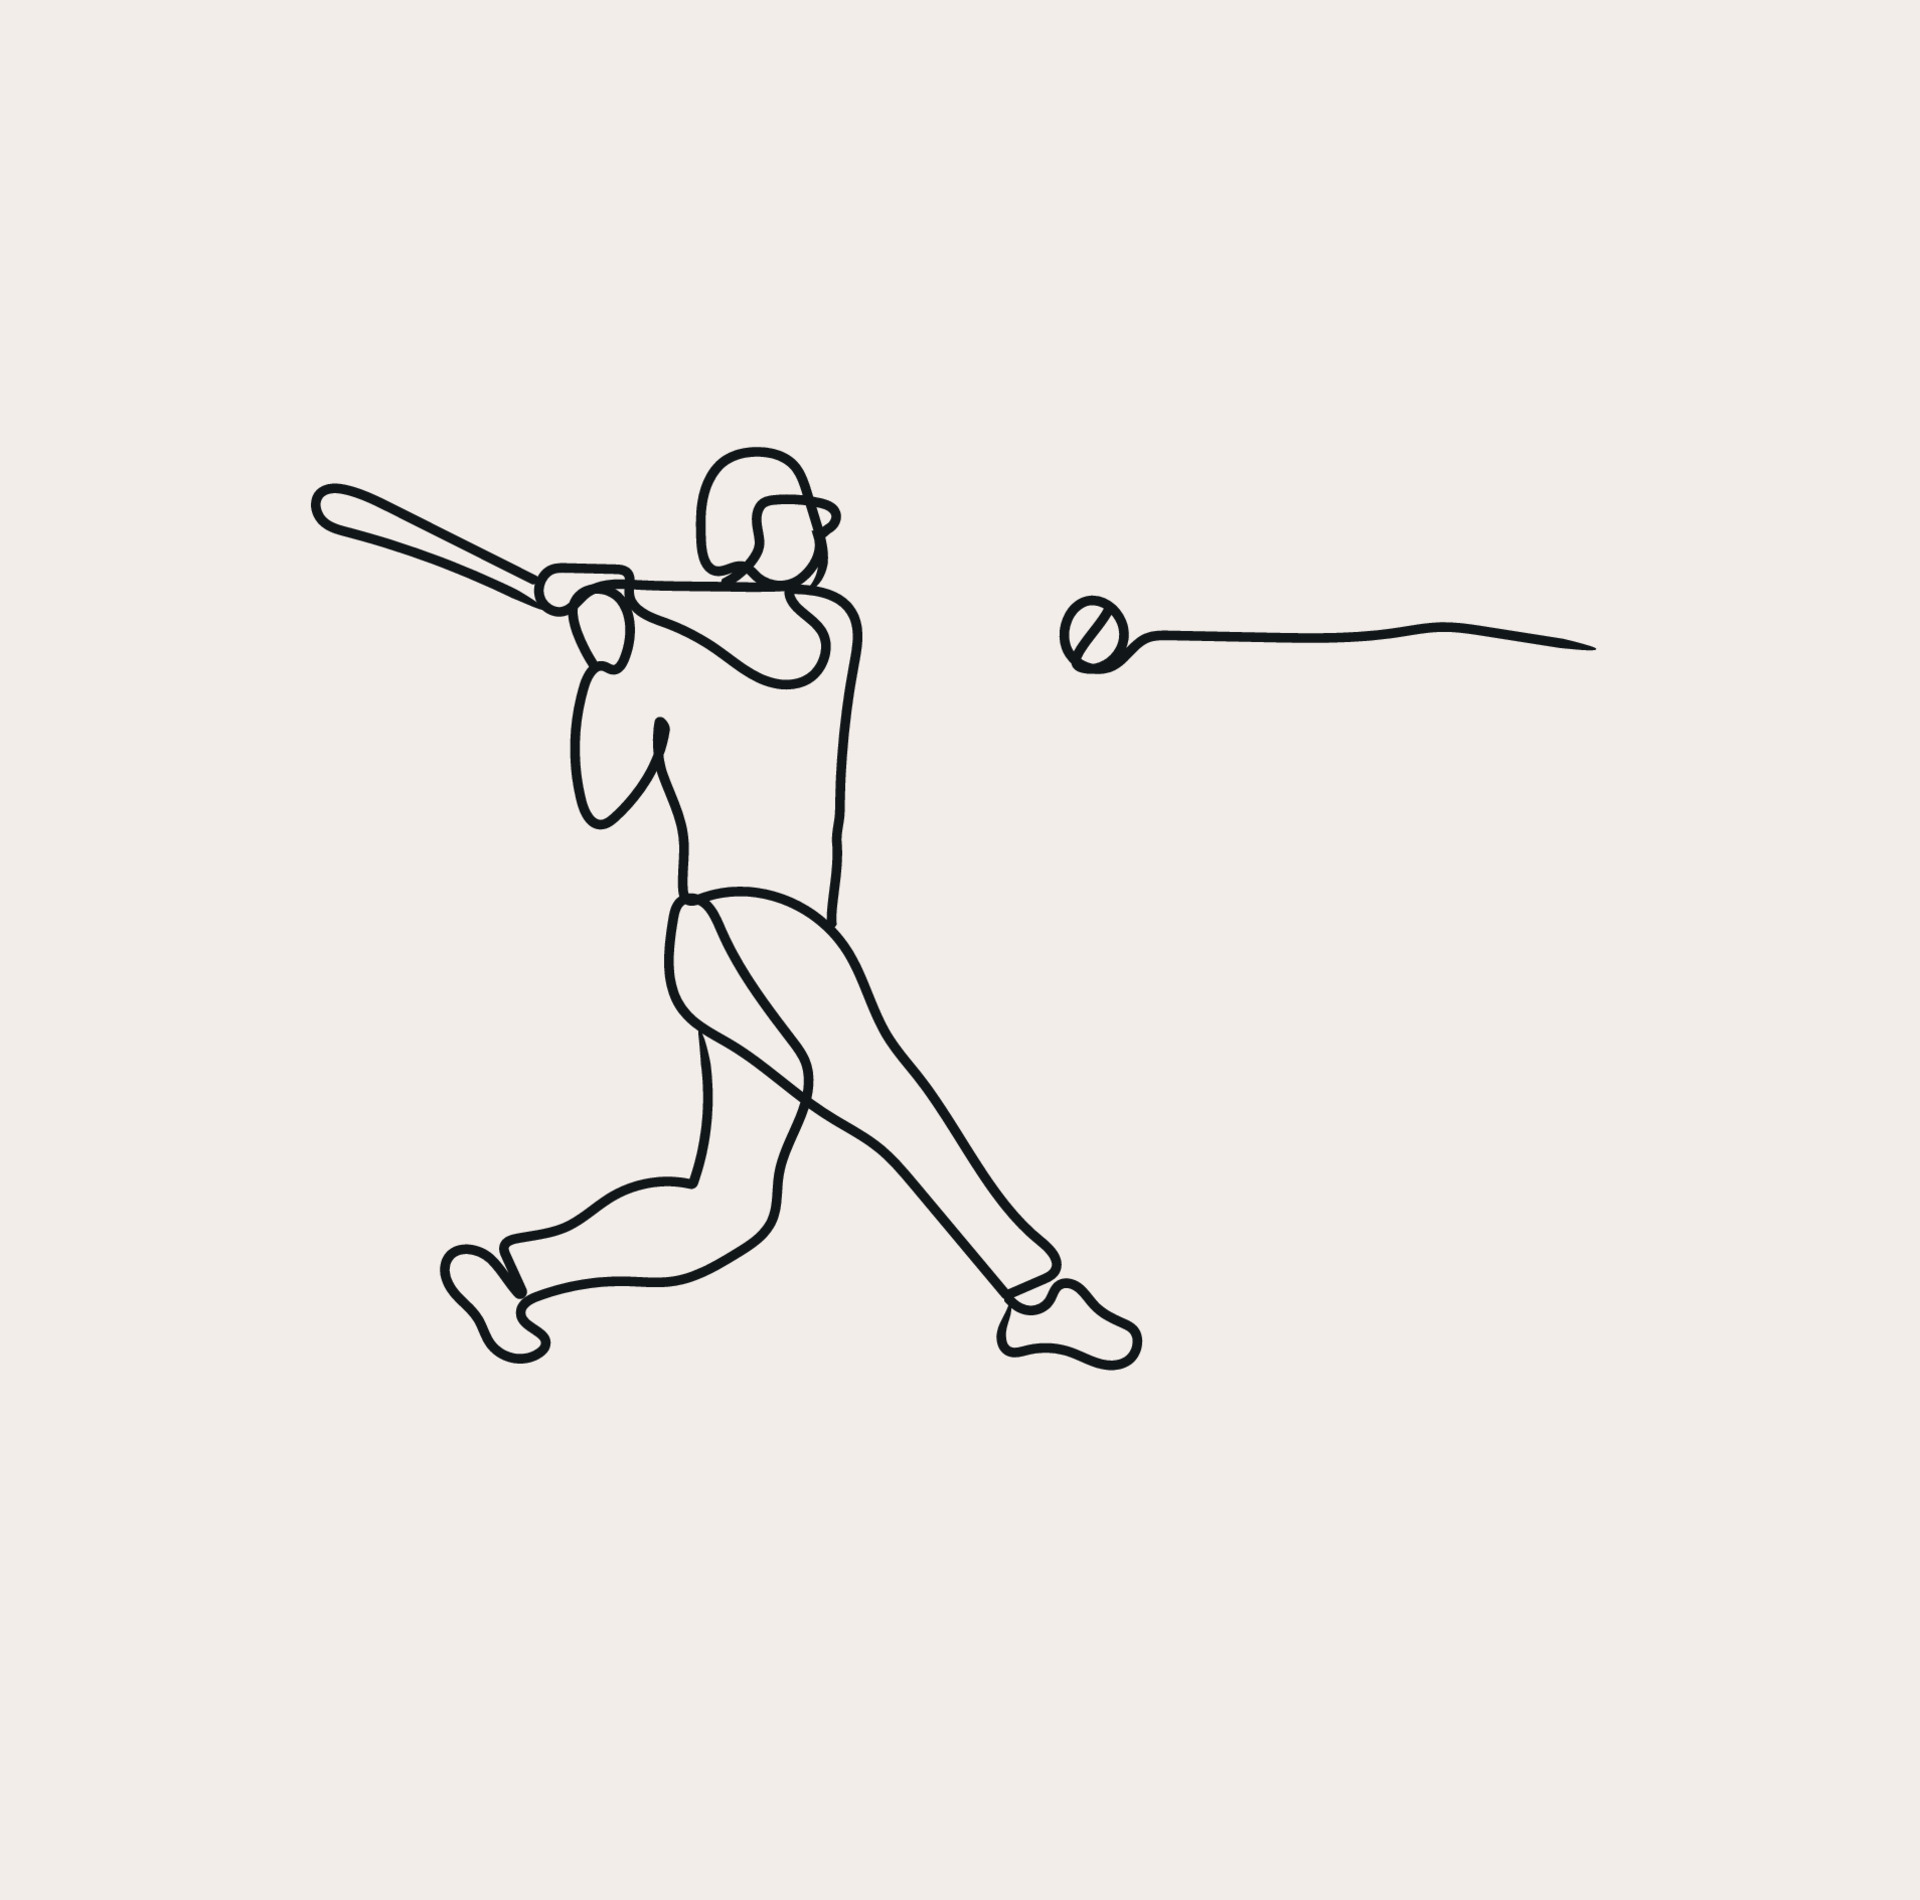 Minimalist Baseball Player Line art, Sport Athlete Player, Outline